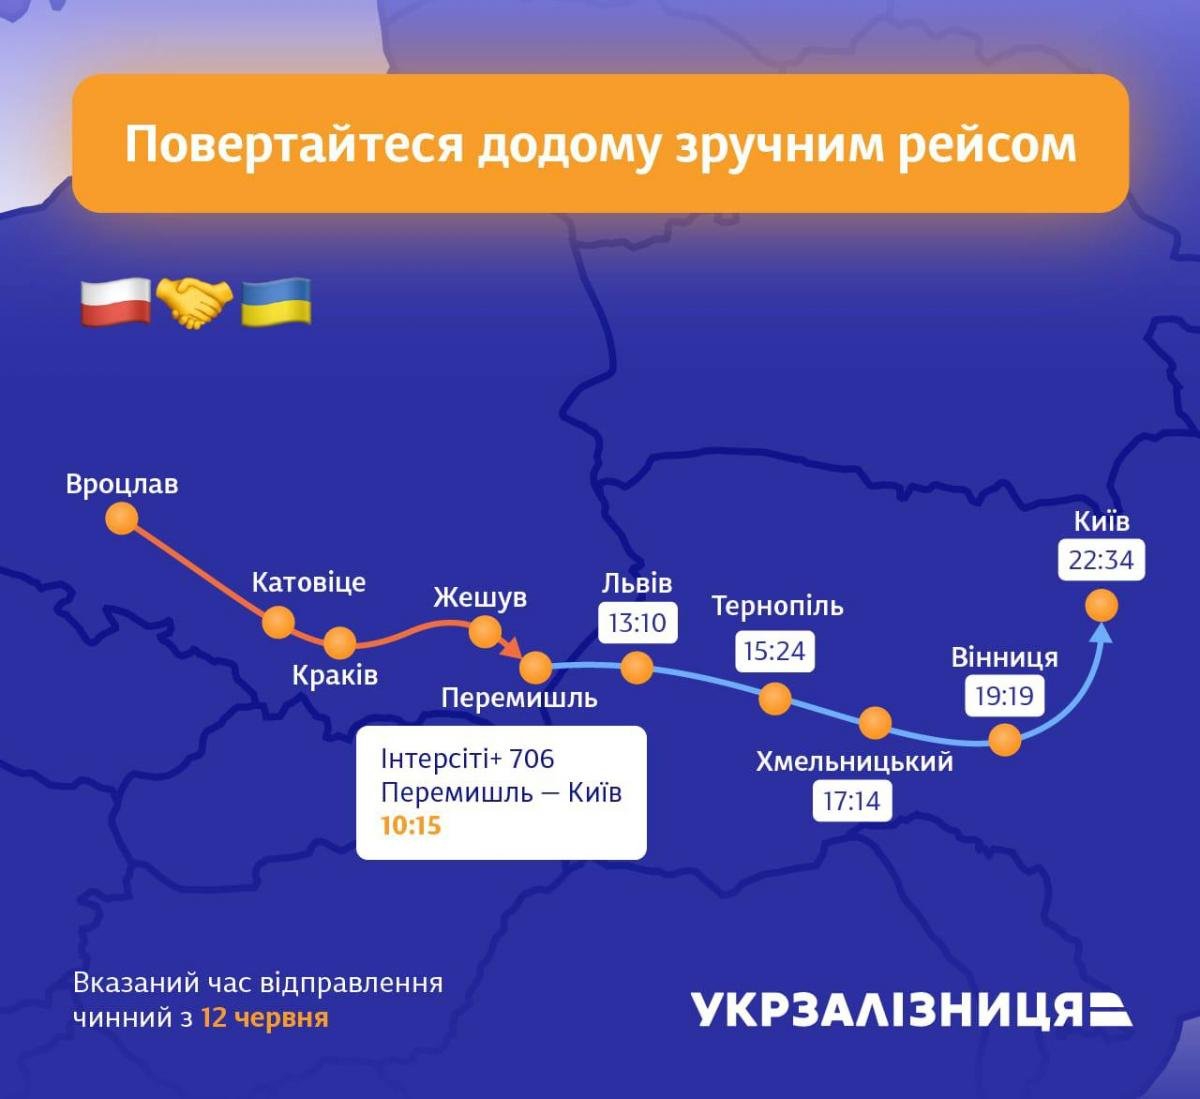 The schedule of the train Intercity + 706 "Przemysl - Kyiv" / photo t.me/UkrzalInfo